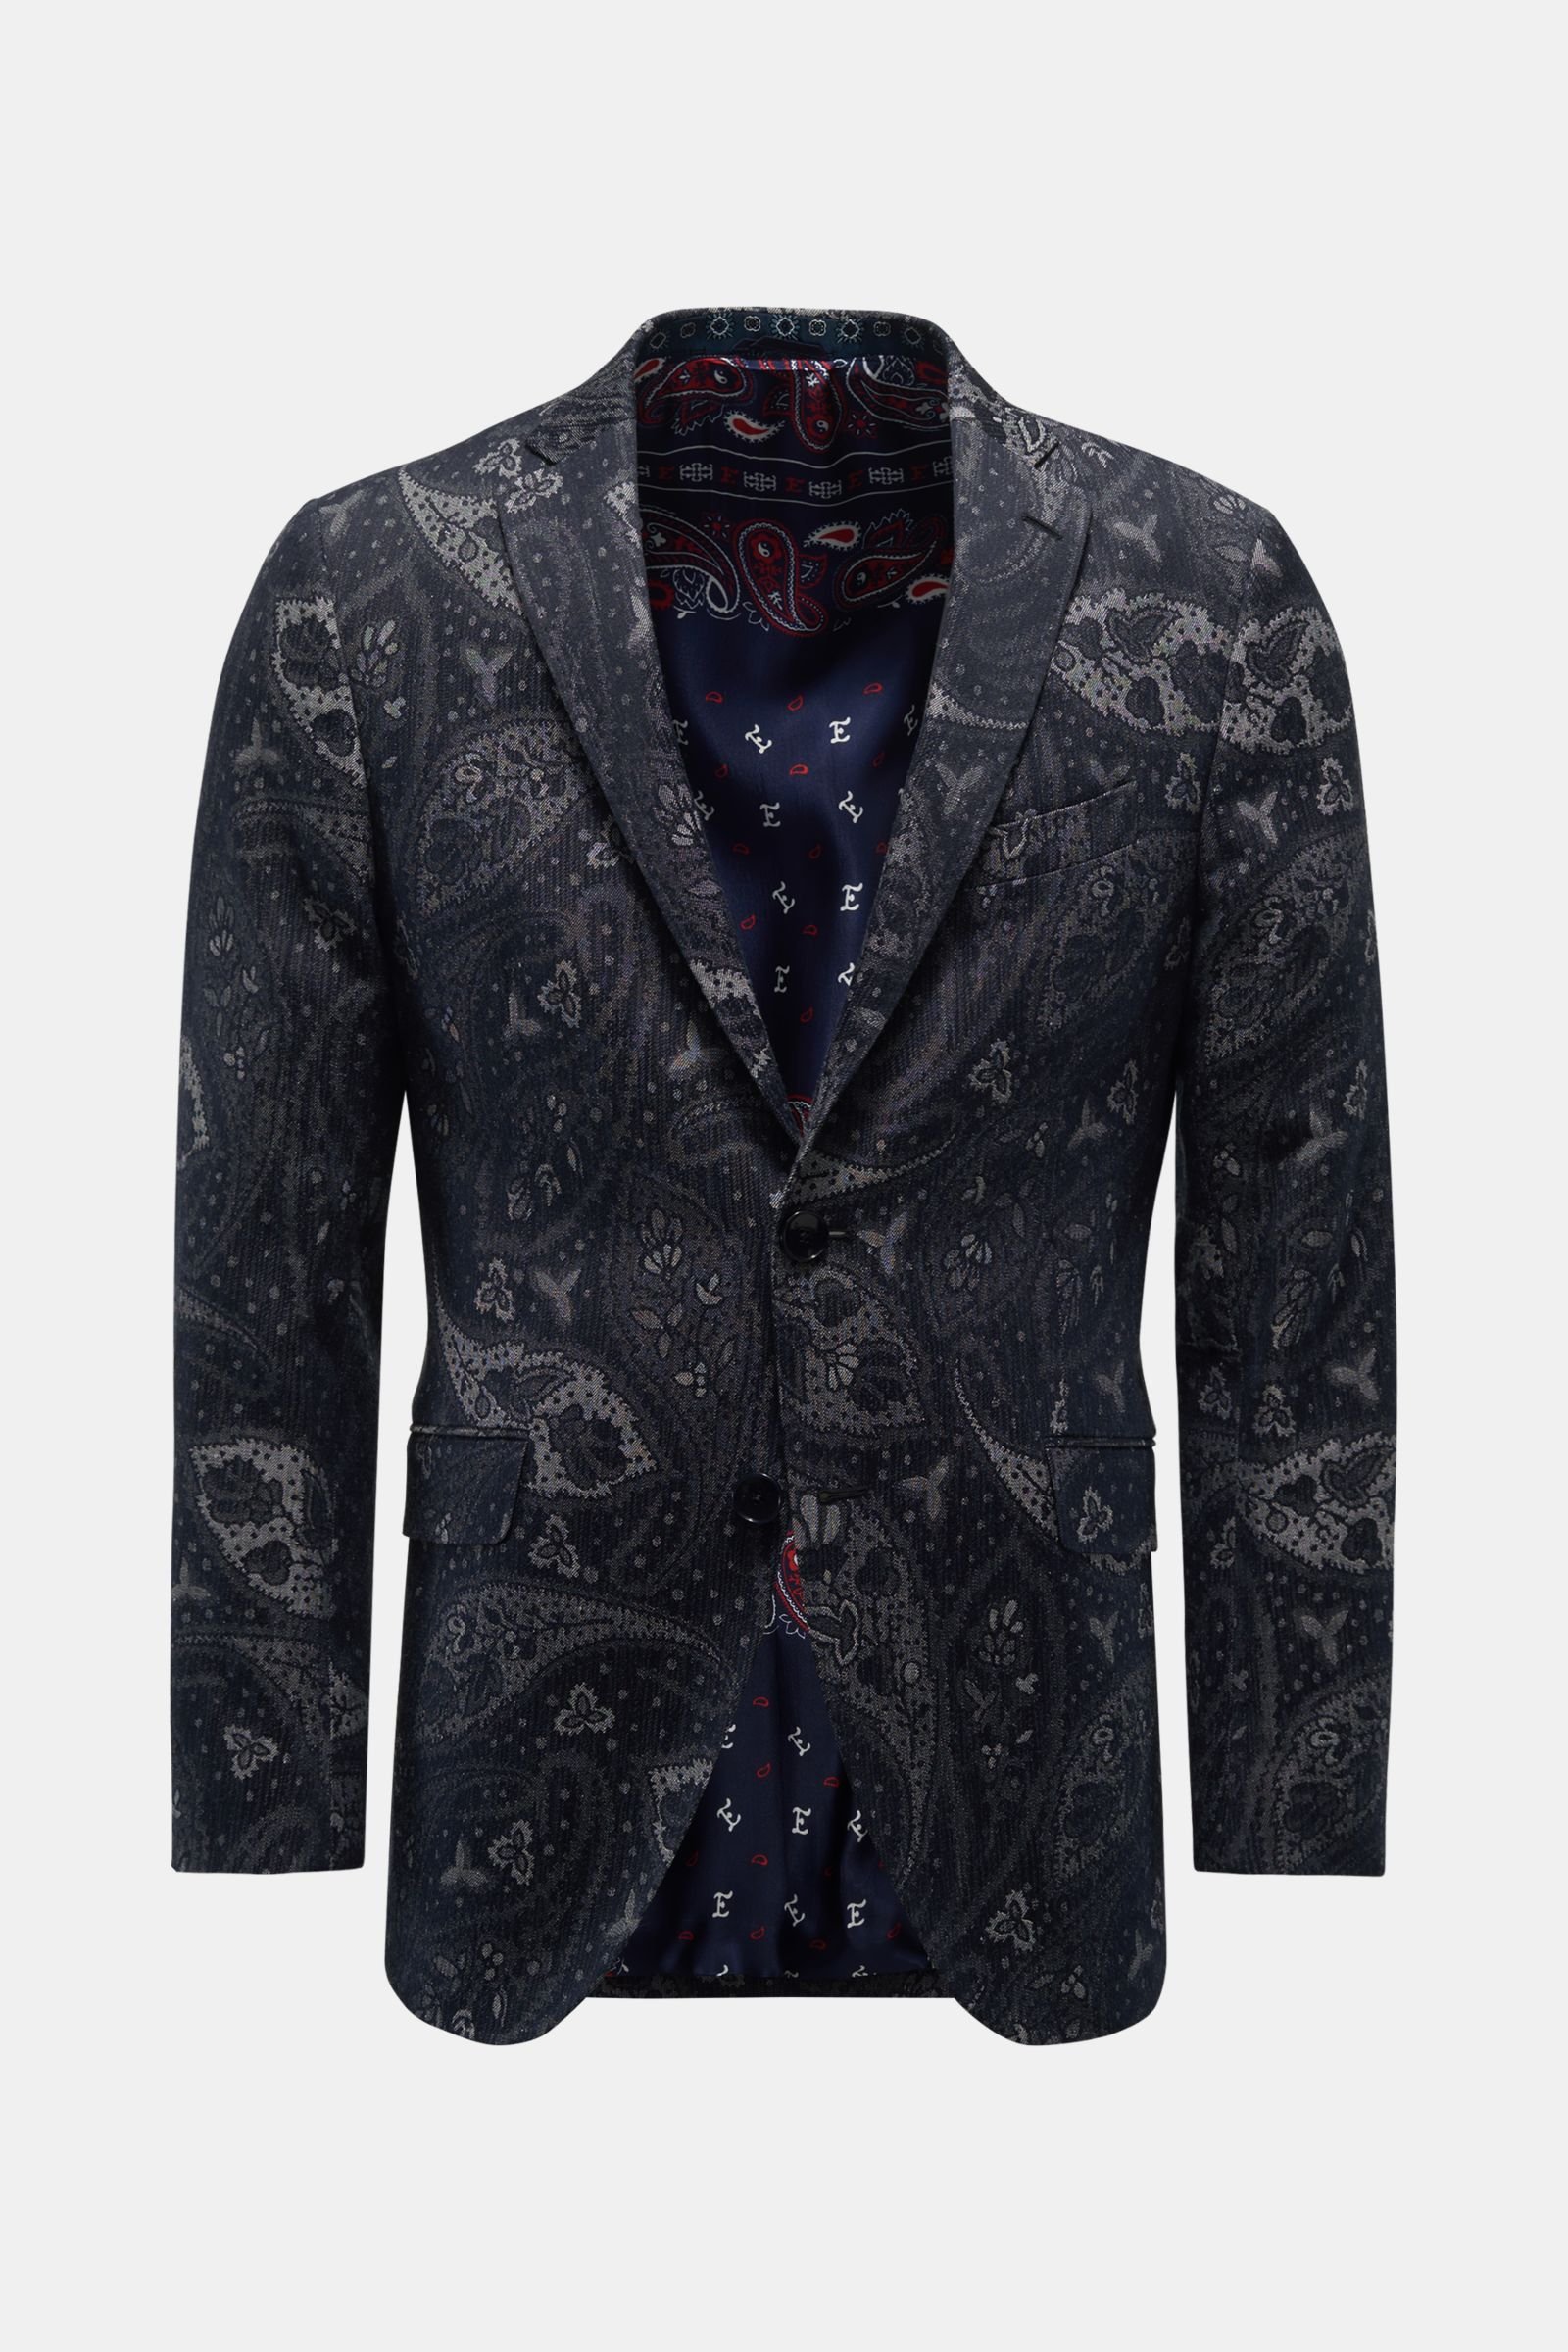 Jacquard smart-casual jacket navy patterned